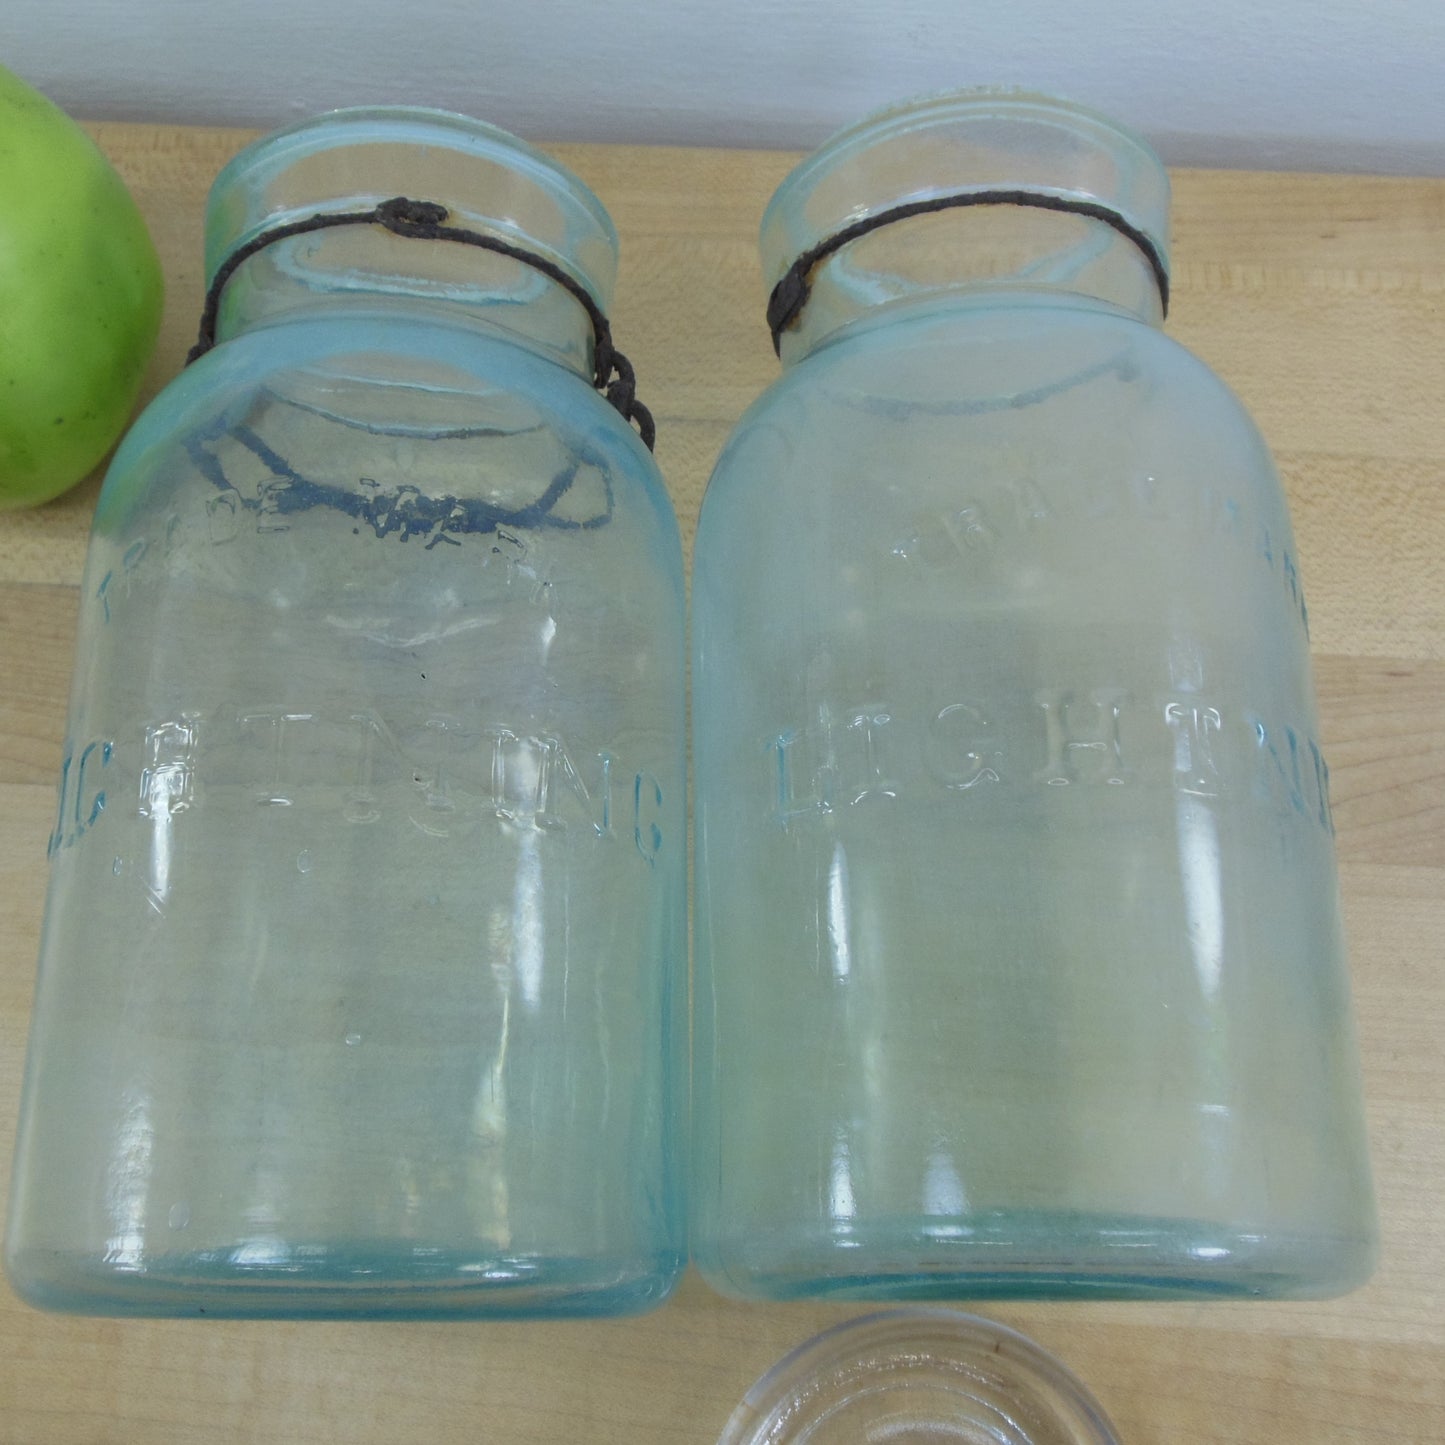 Lightning Putnam Trademark Pair Aqua Glass 1 Quart Fruit Canning Jars Vintage